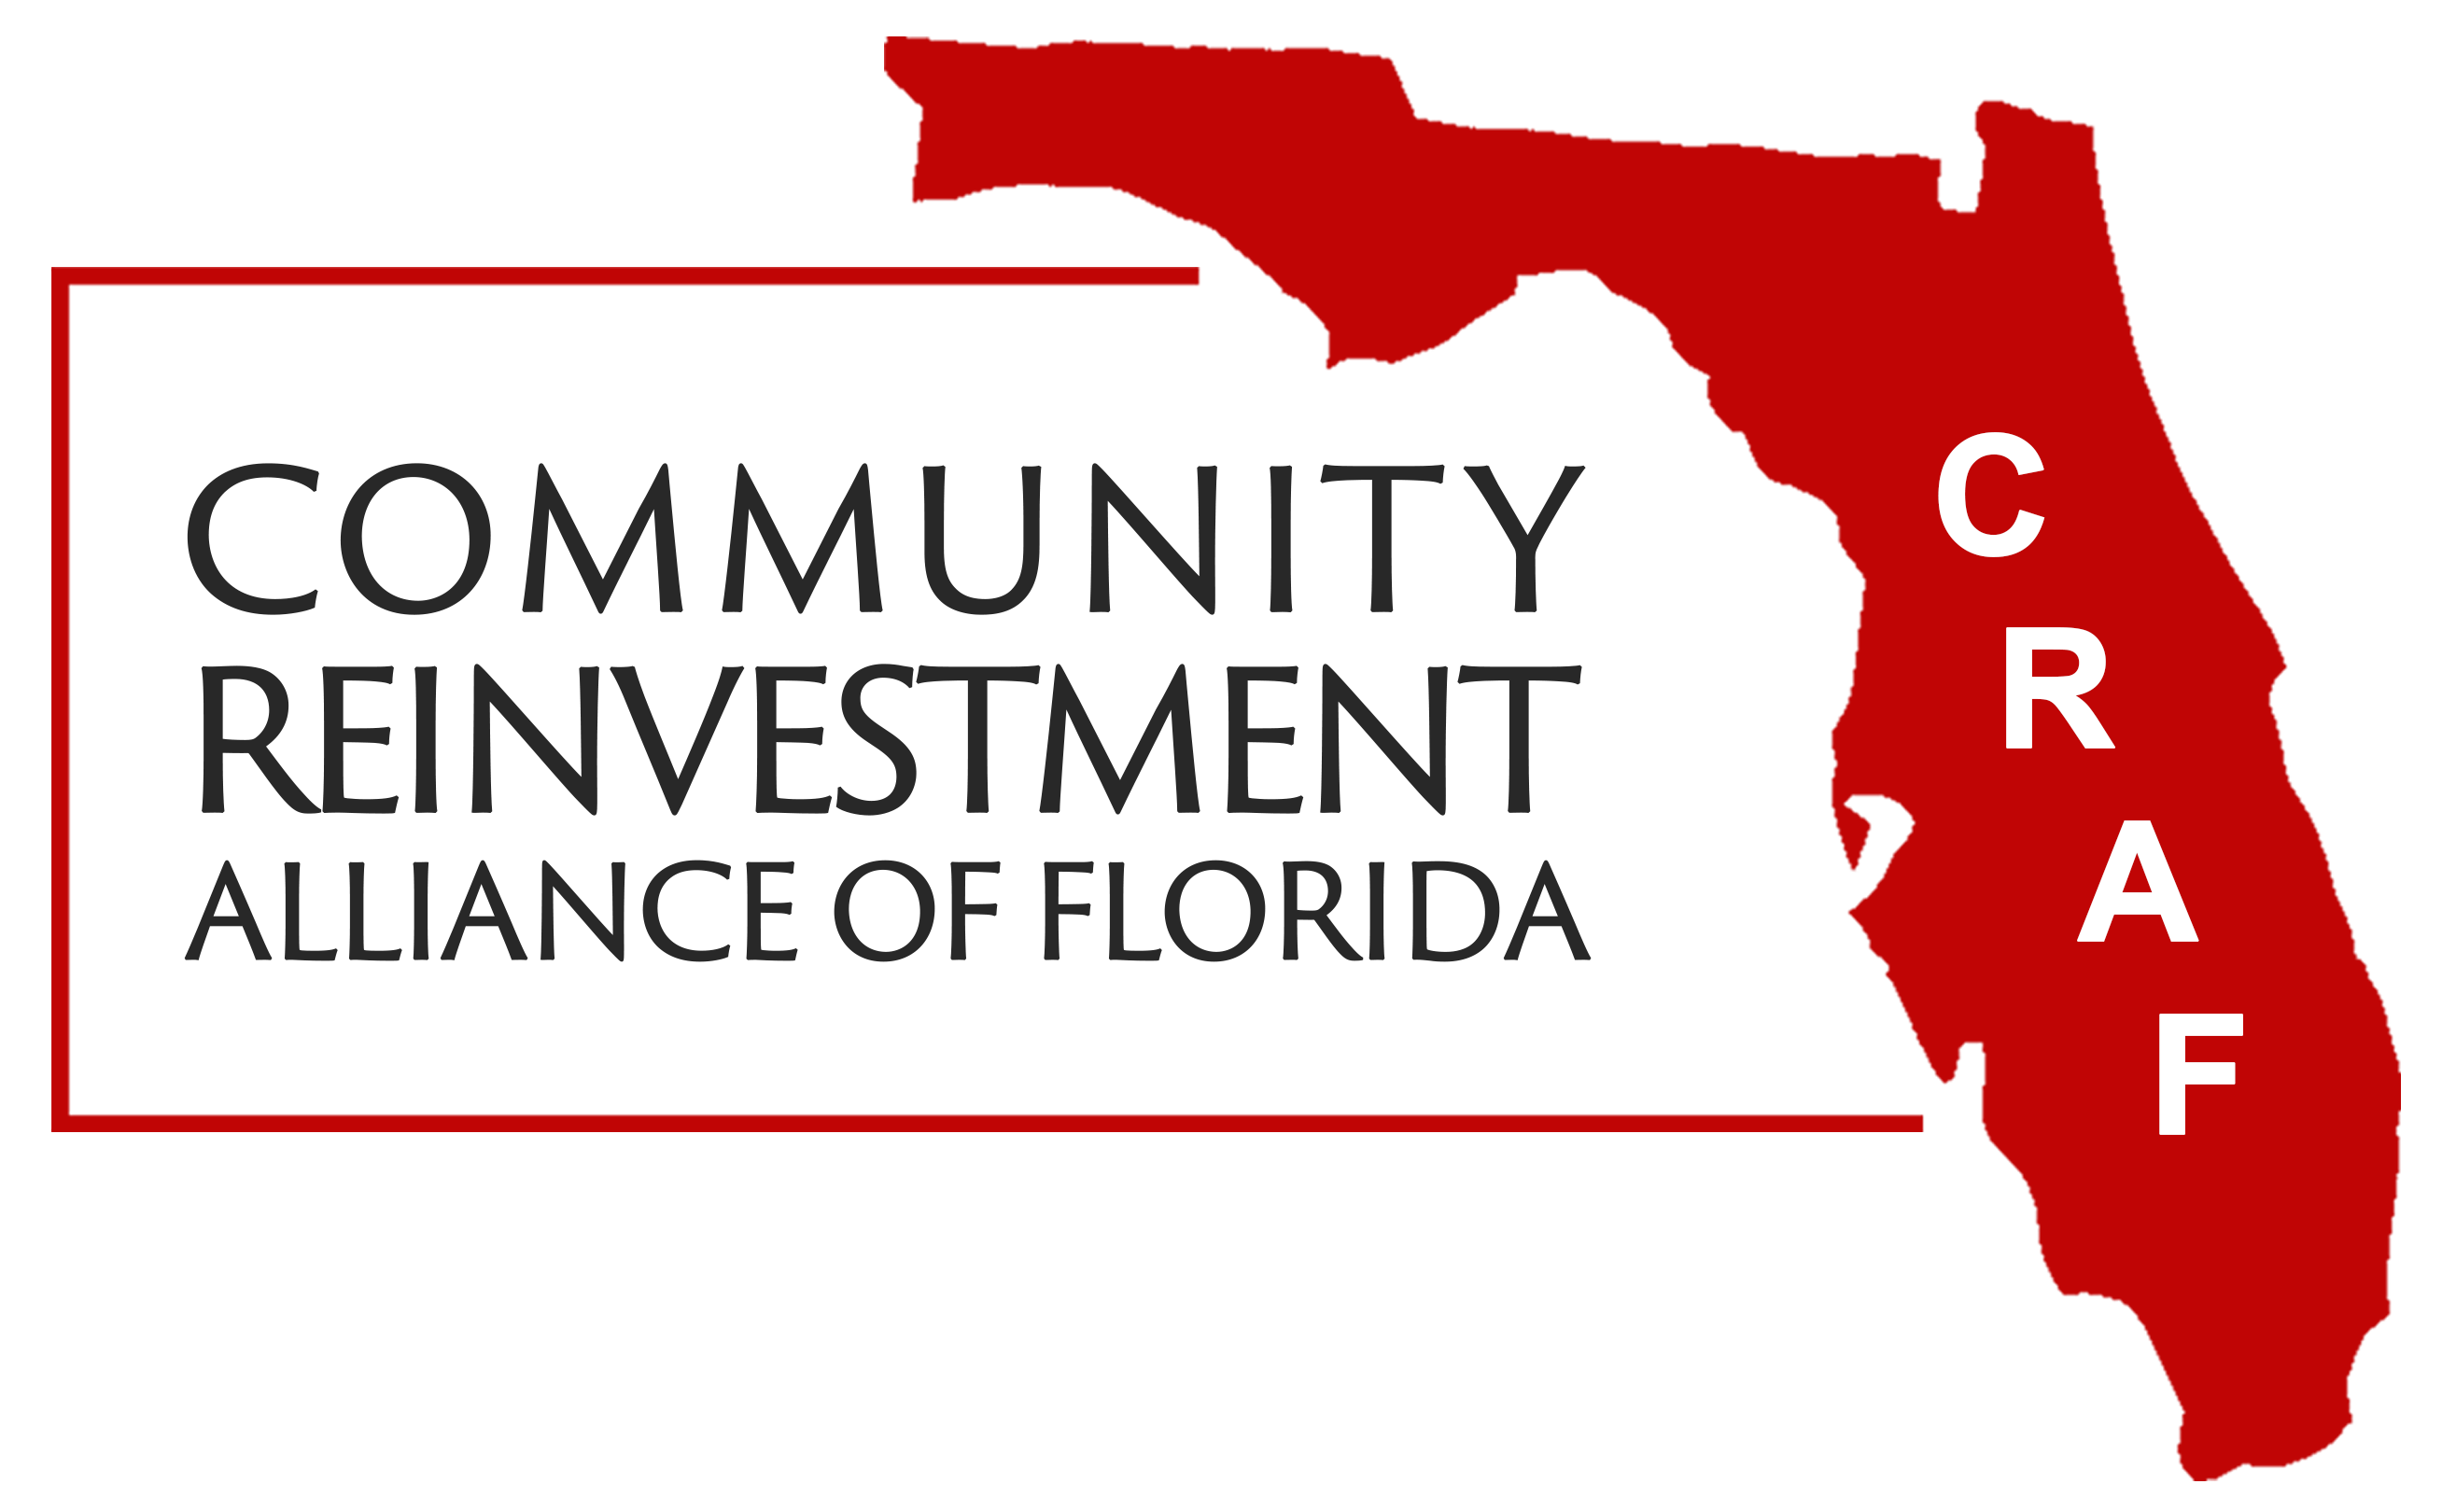 Community Reinvestment Alliance of Florida